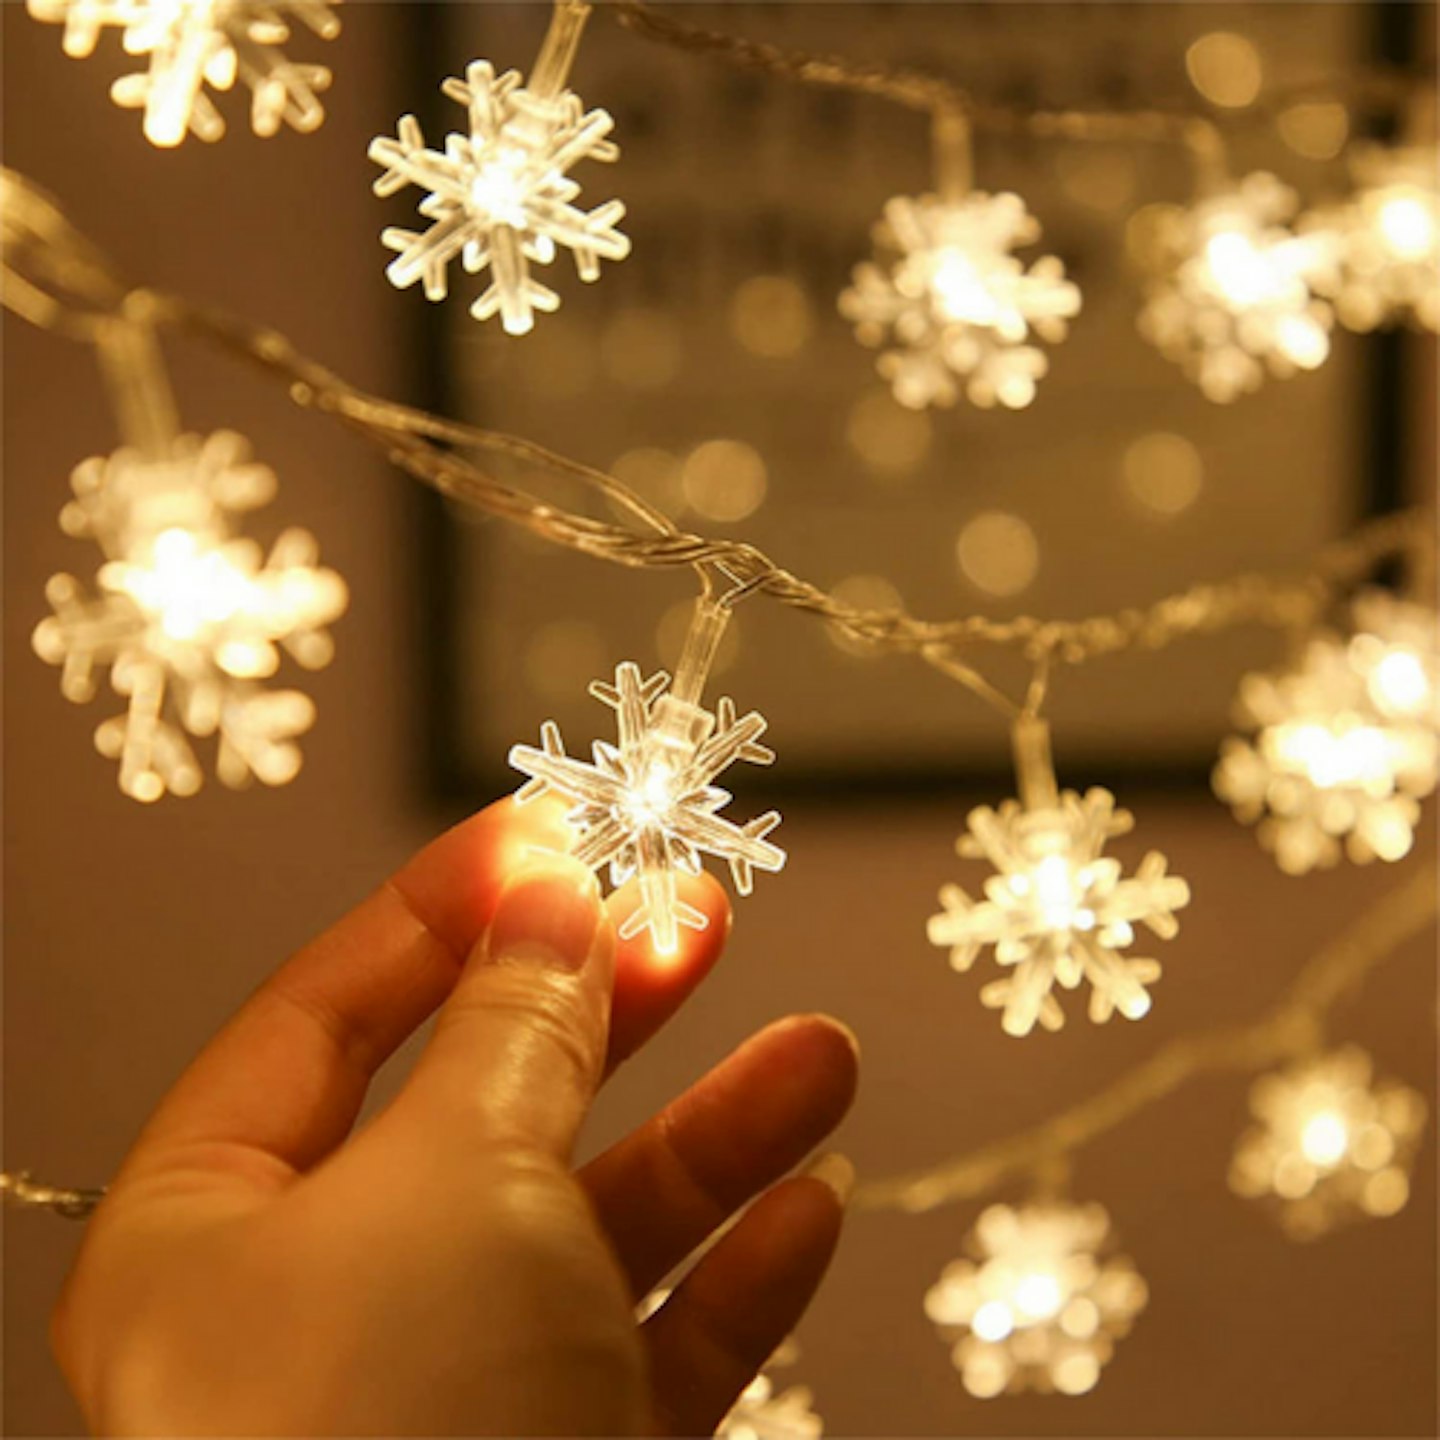 Adispotg Snowflake Fairy Lights, 20ft